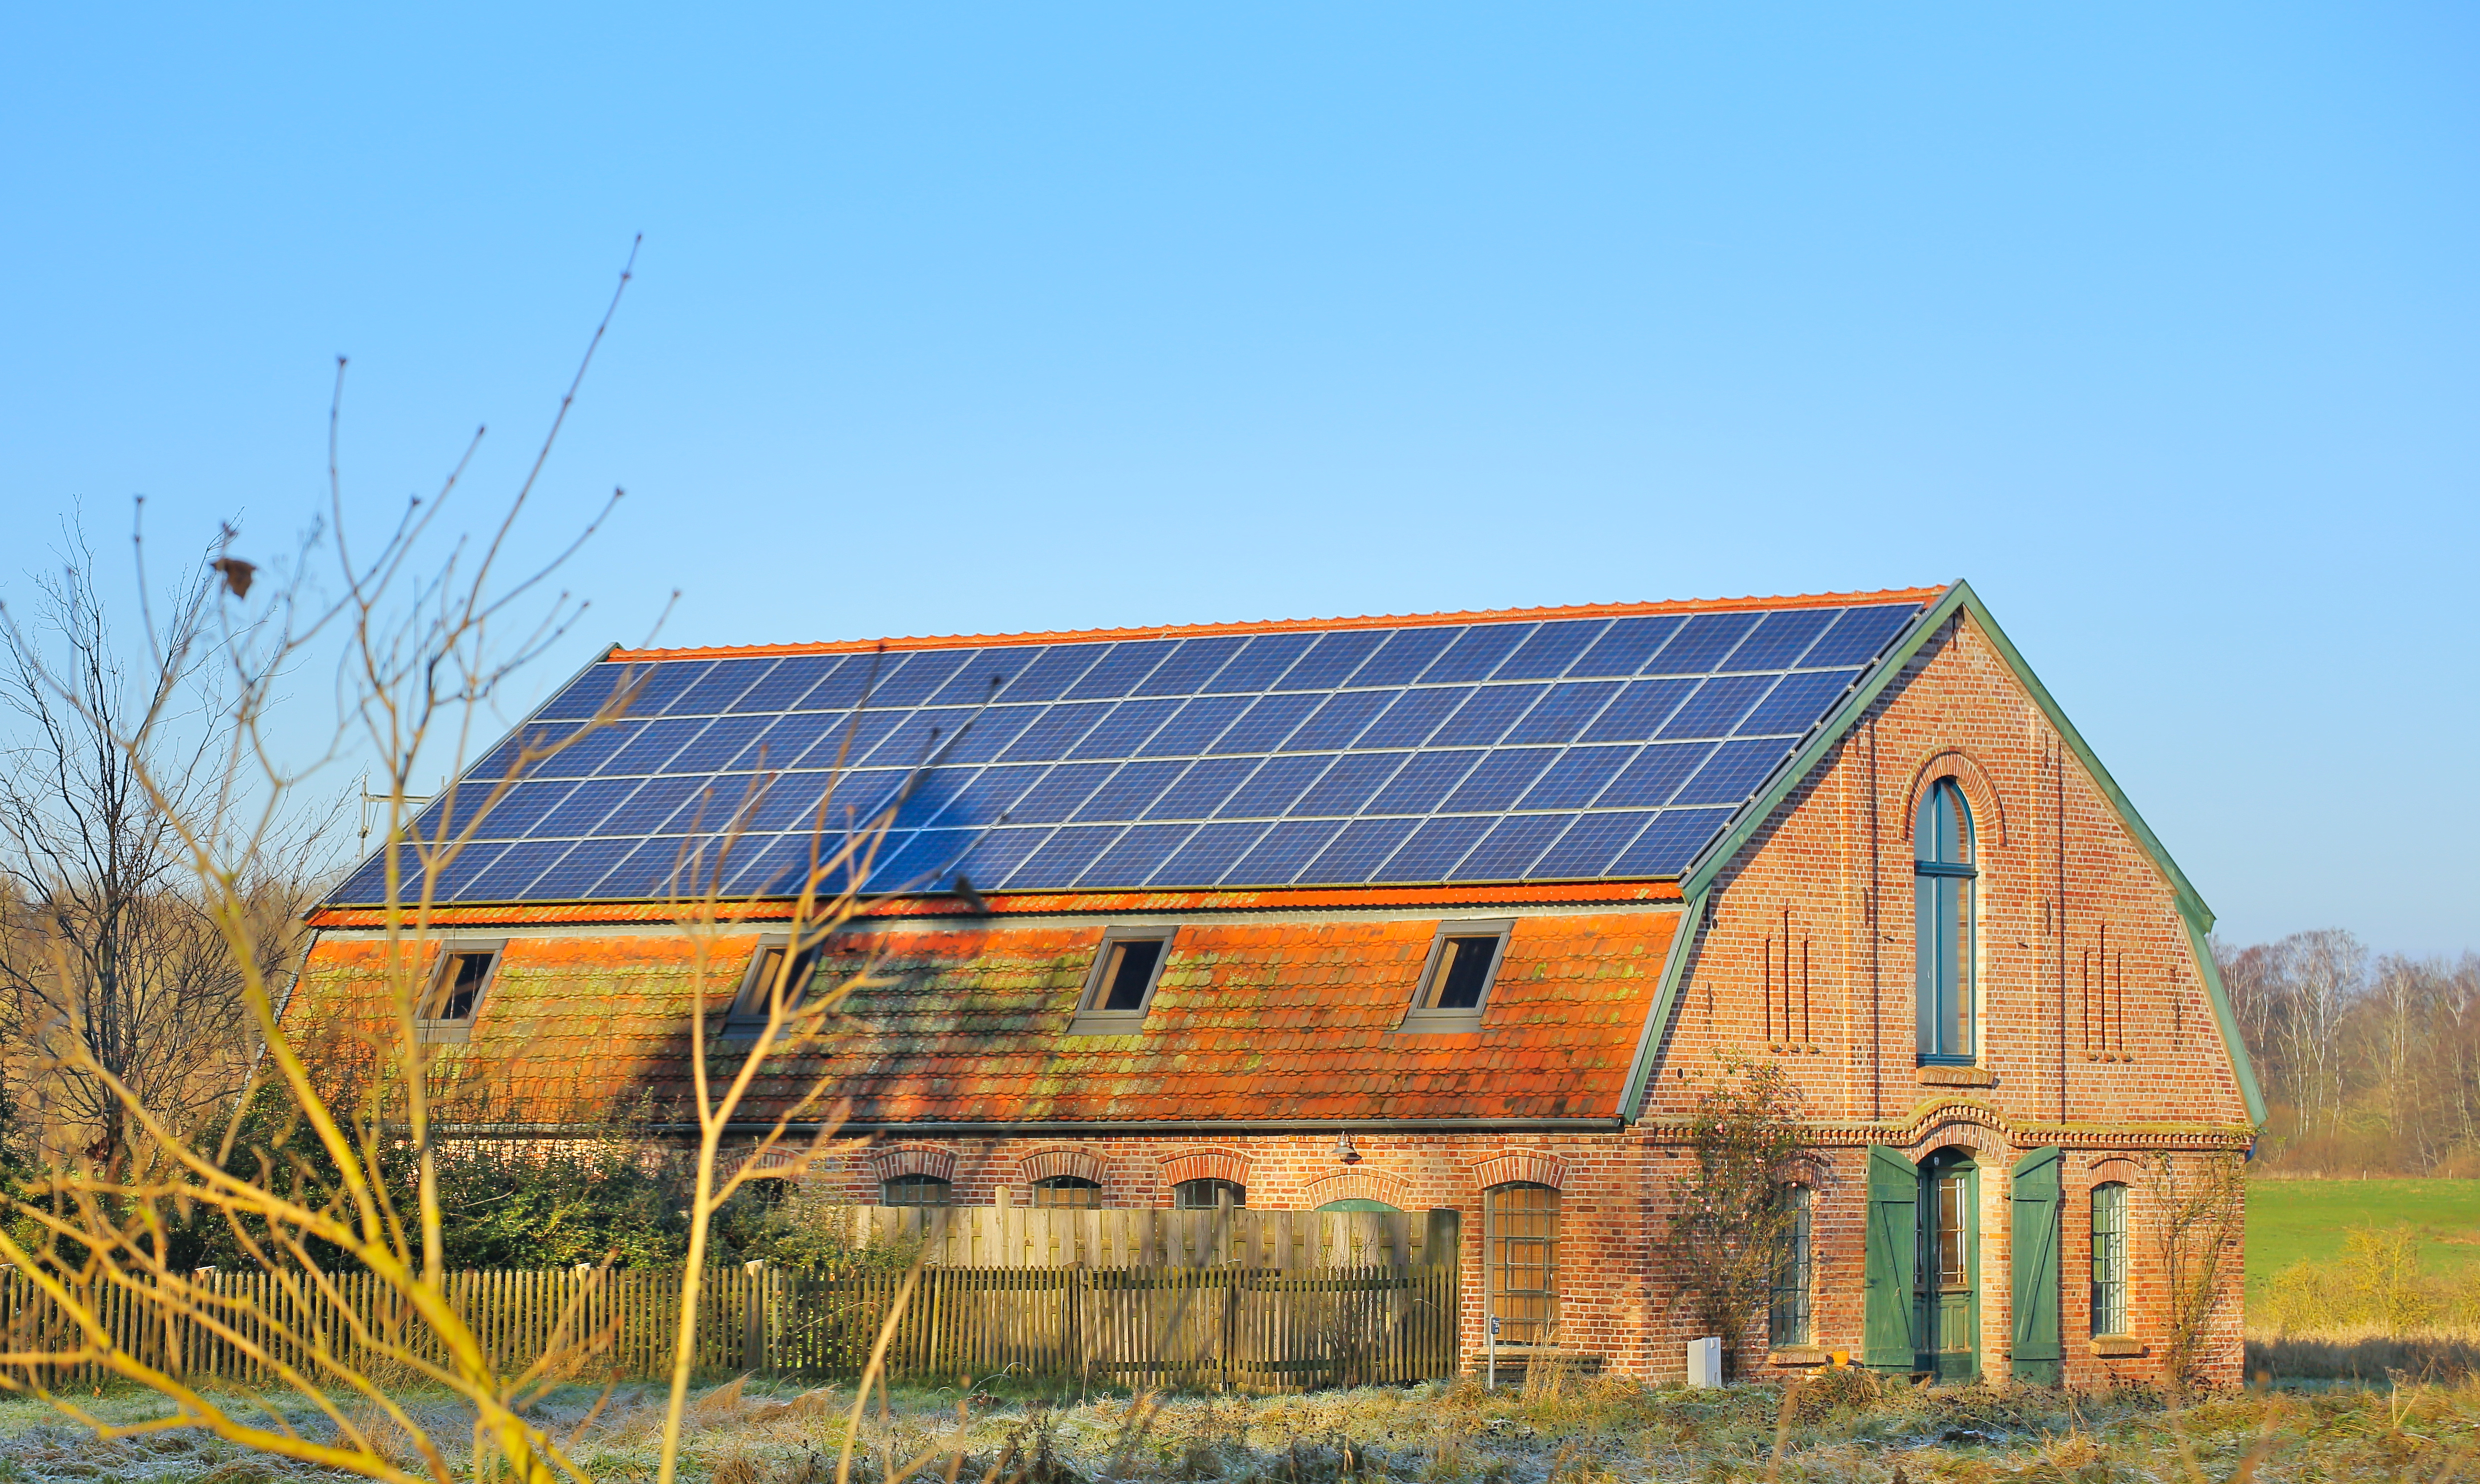 Old farmhouse with solar panels